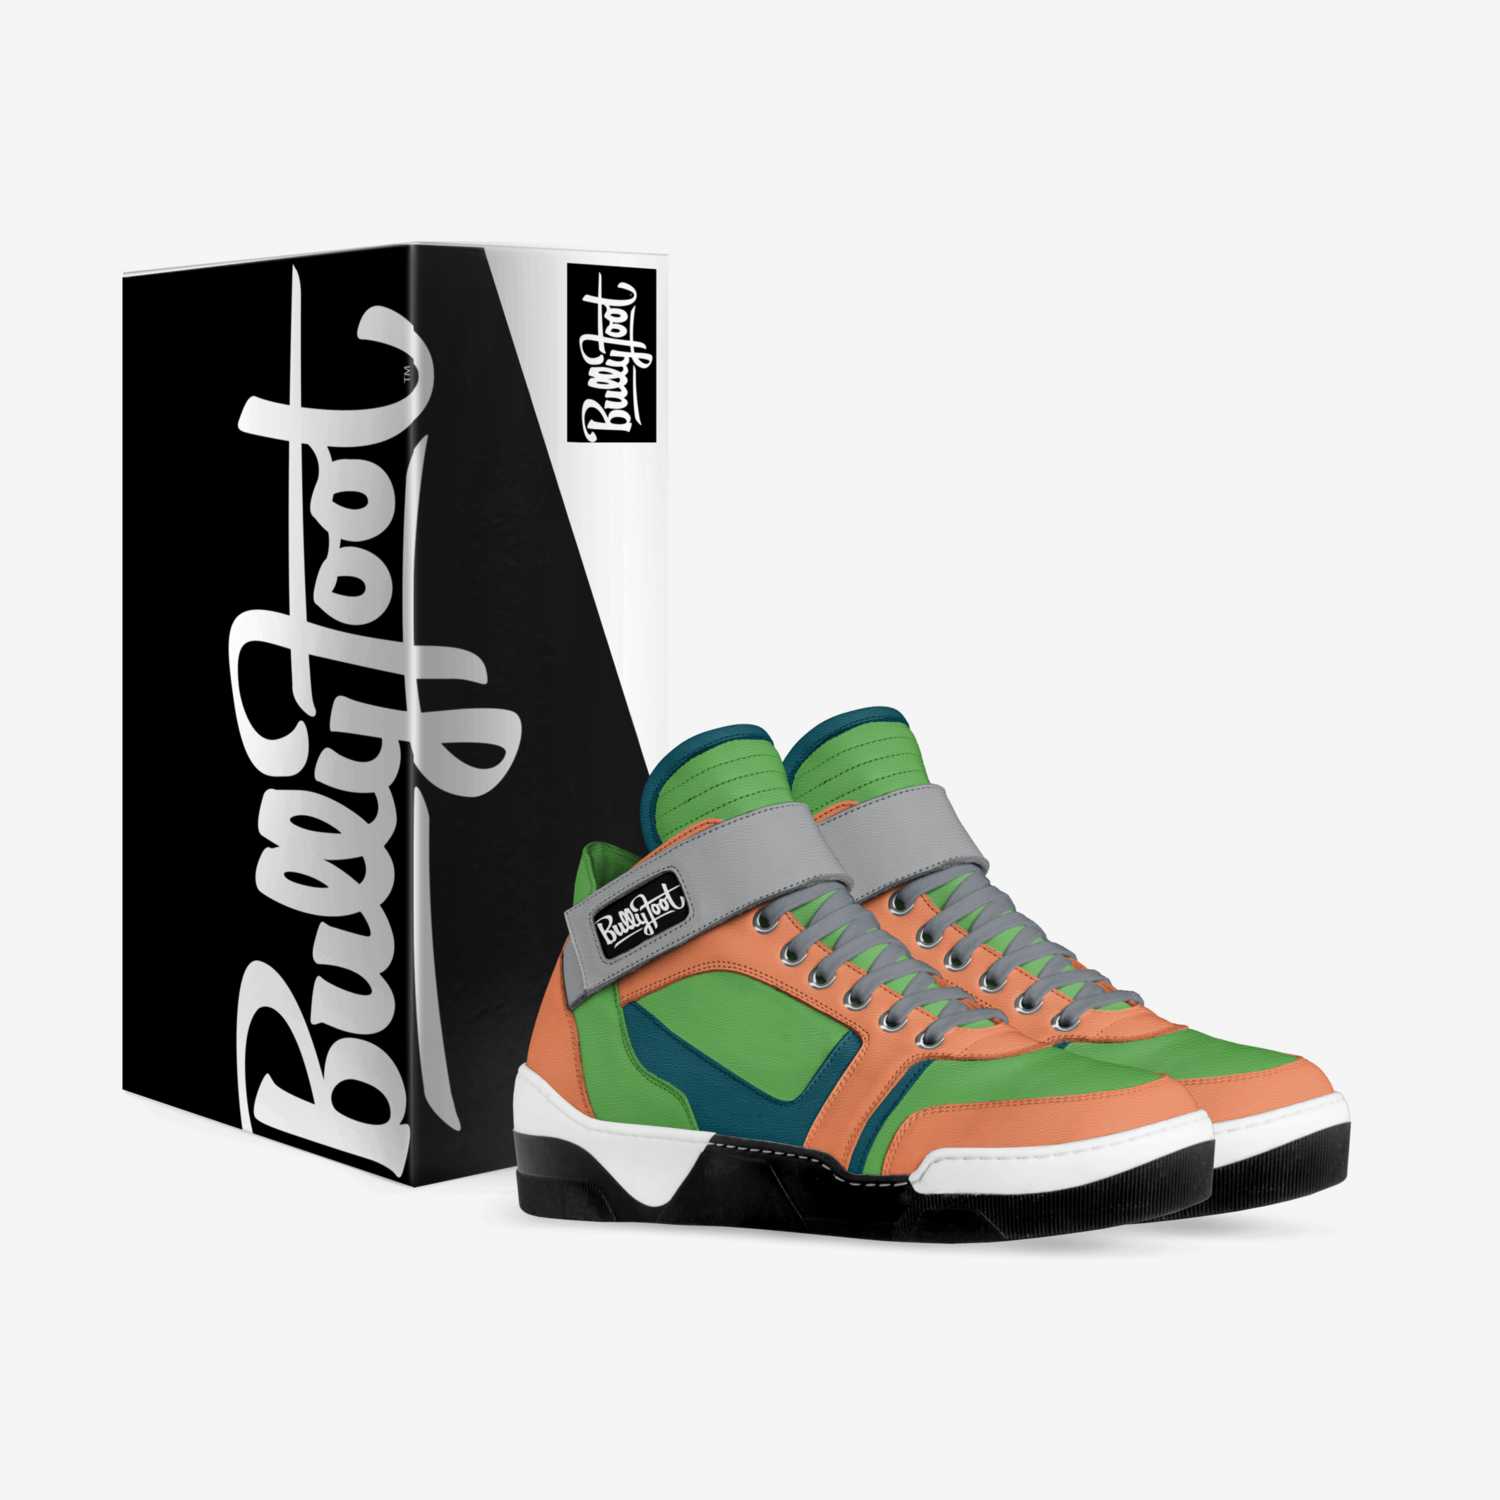 Prospero custom made in Italy shoes by Kraig | Box view